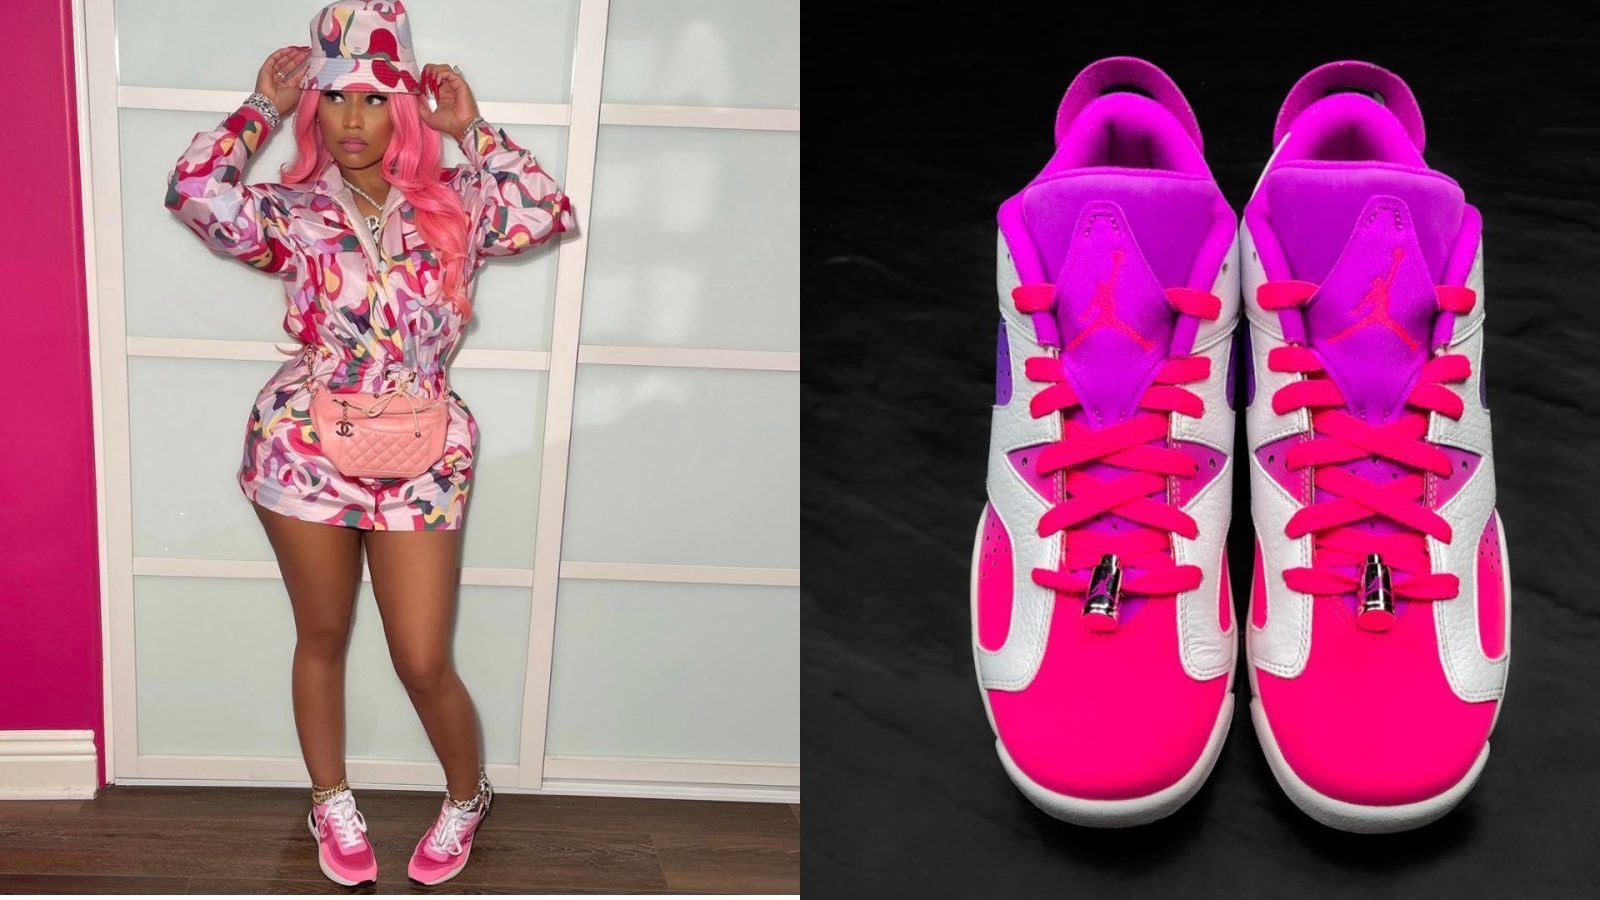 Nicki Minaj's new bright-pink Air Jordans are super freaky in the